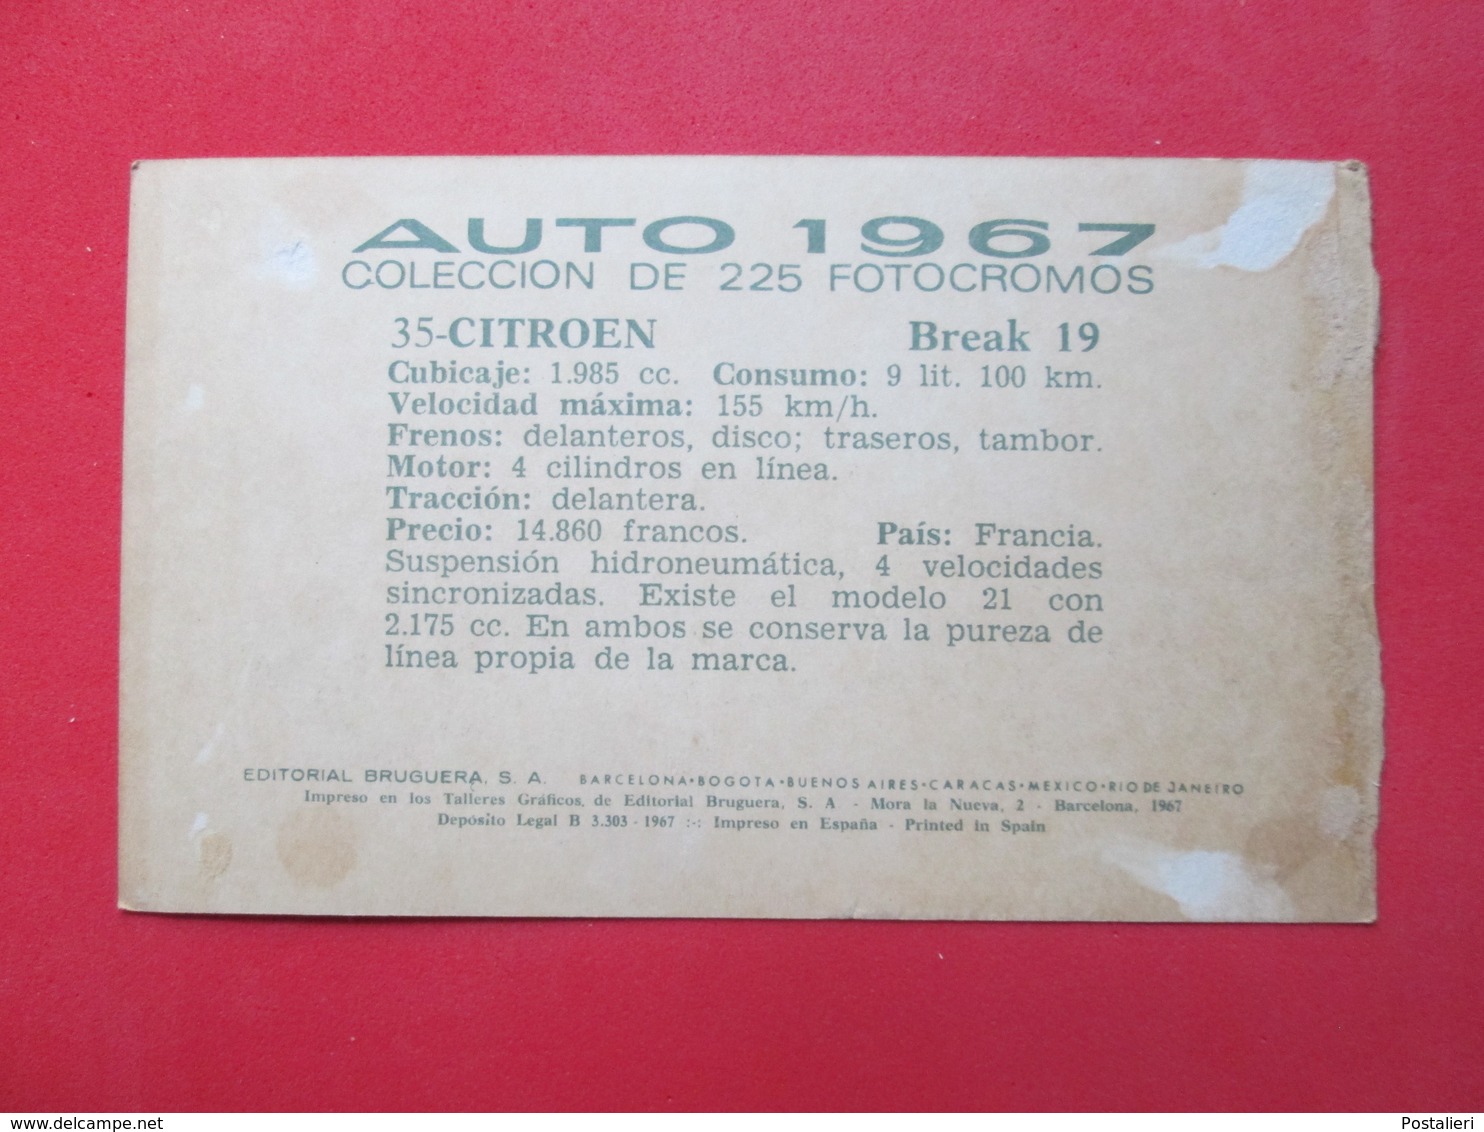 Trading Card (Cromo) - Citroën Break 19 - Nº 35 - Col. Autos 1967 - Ed. Bruguera 1967 - (Spain) / France - Voitures